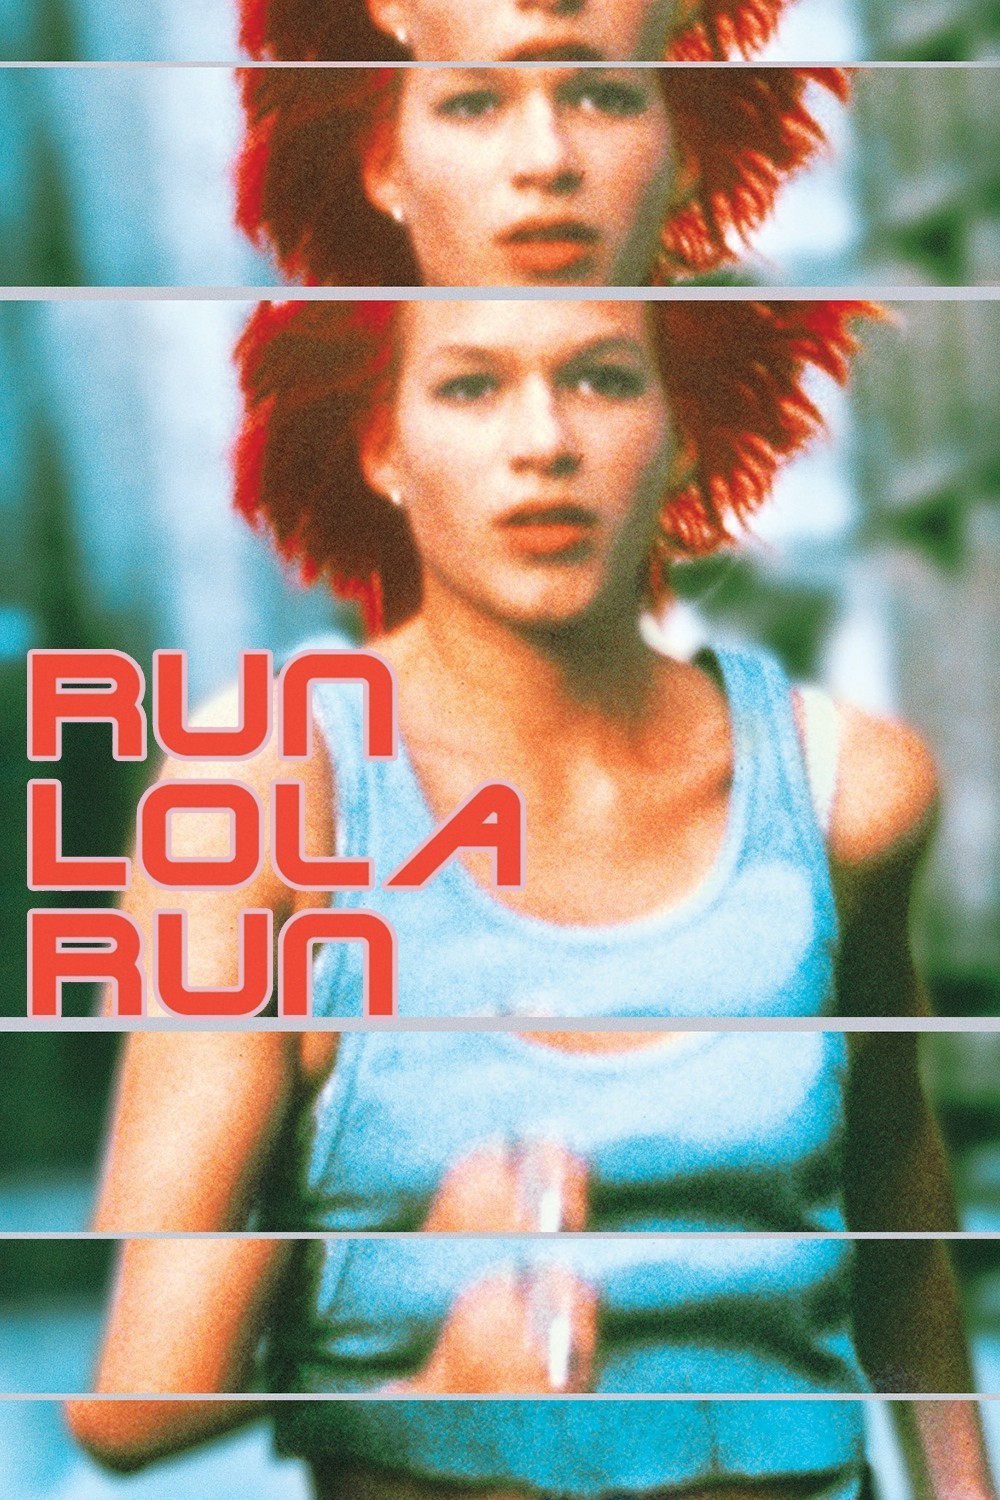 Analysis of German Film Run Lola Run